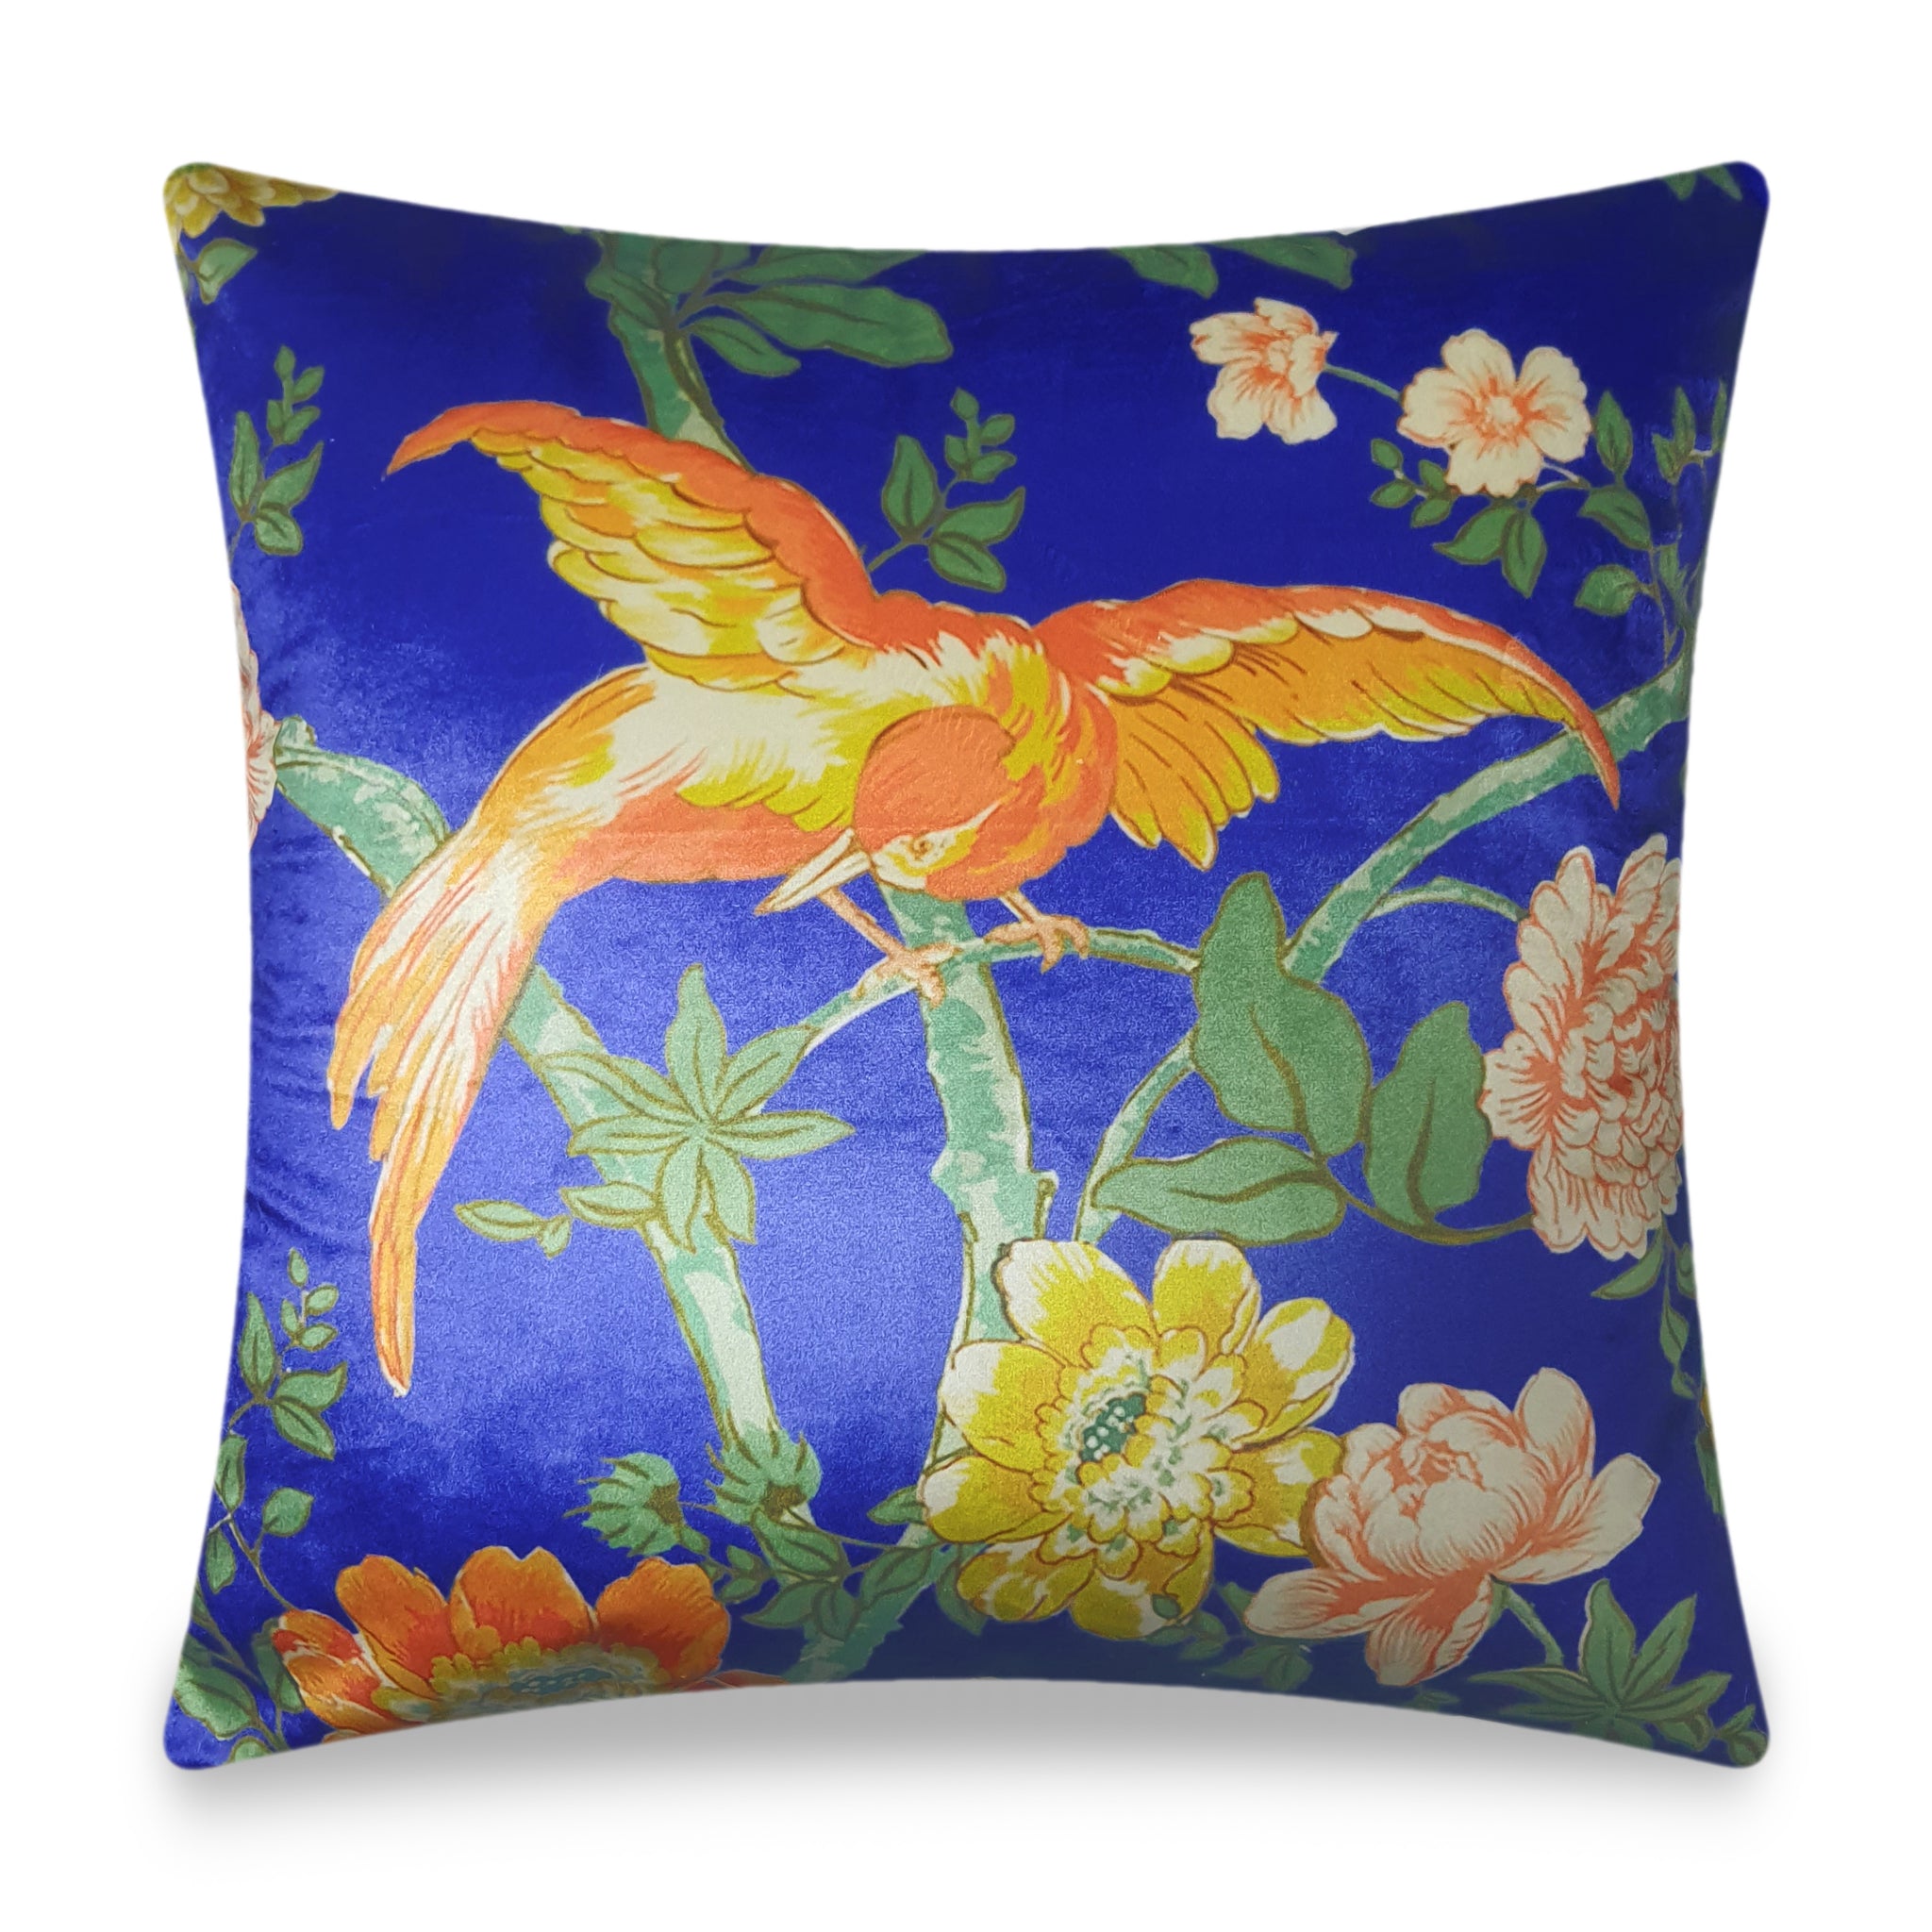  Velvet Cushion Cover Exotic Bird and Florals Decorative Pillowcase Classic Home Decor Throw Pillow for Sofa Chair 45x45 cm 